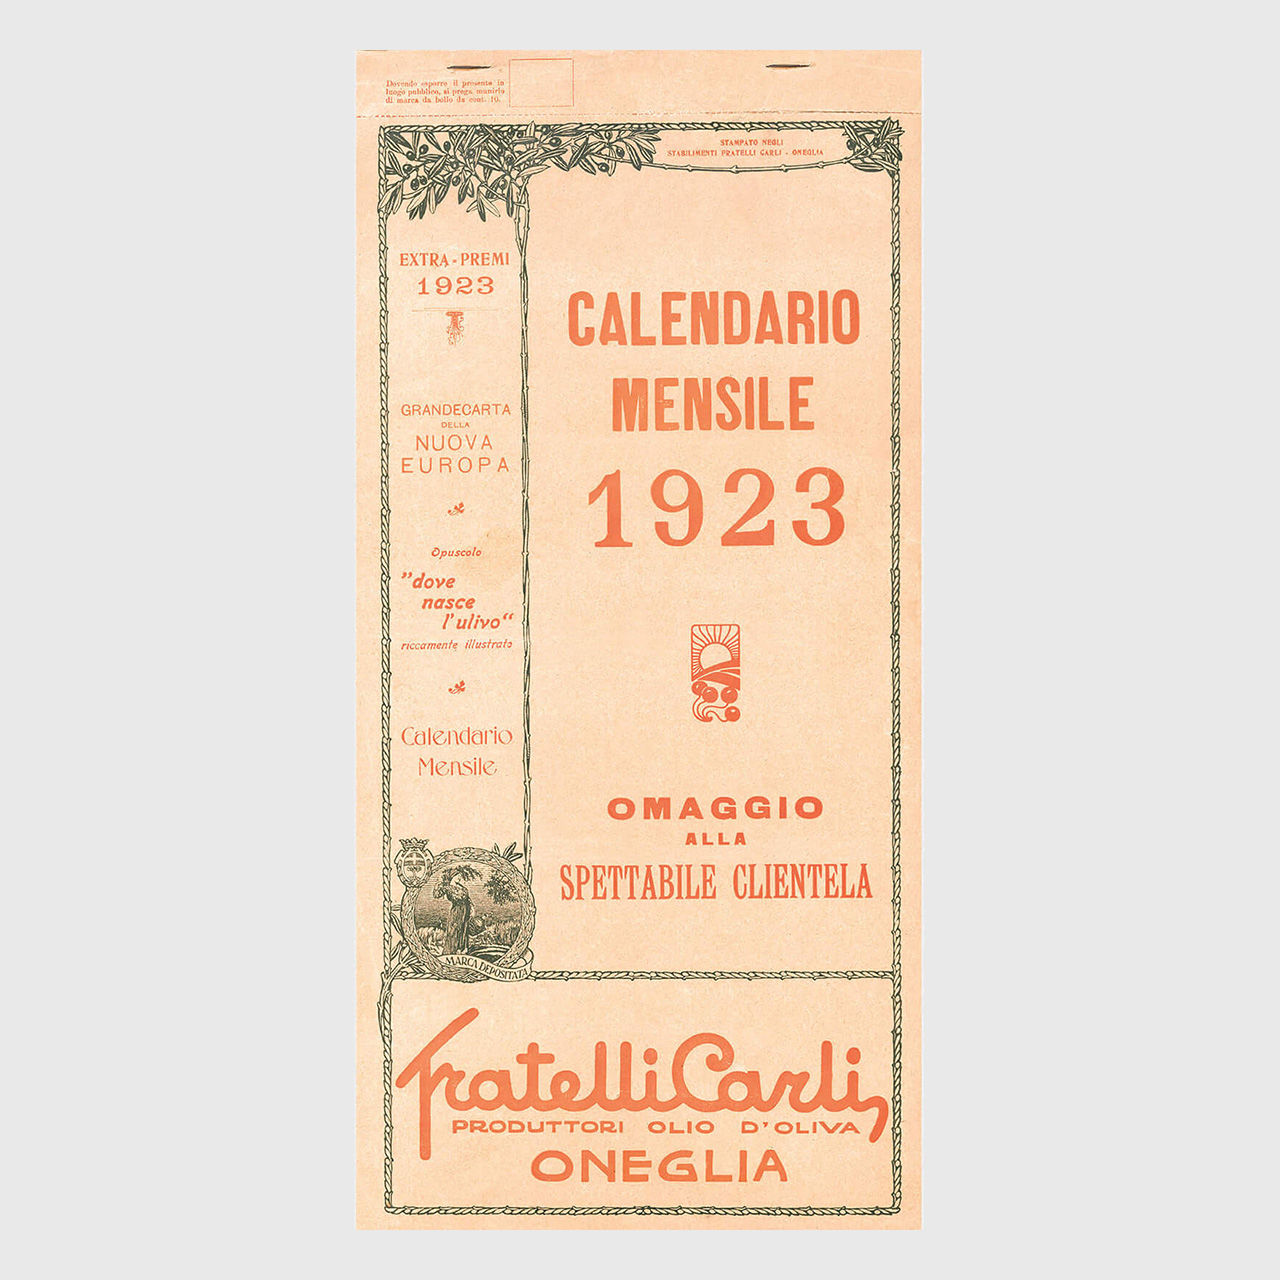 Olio Carli calendar 